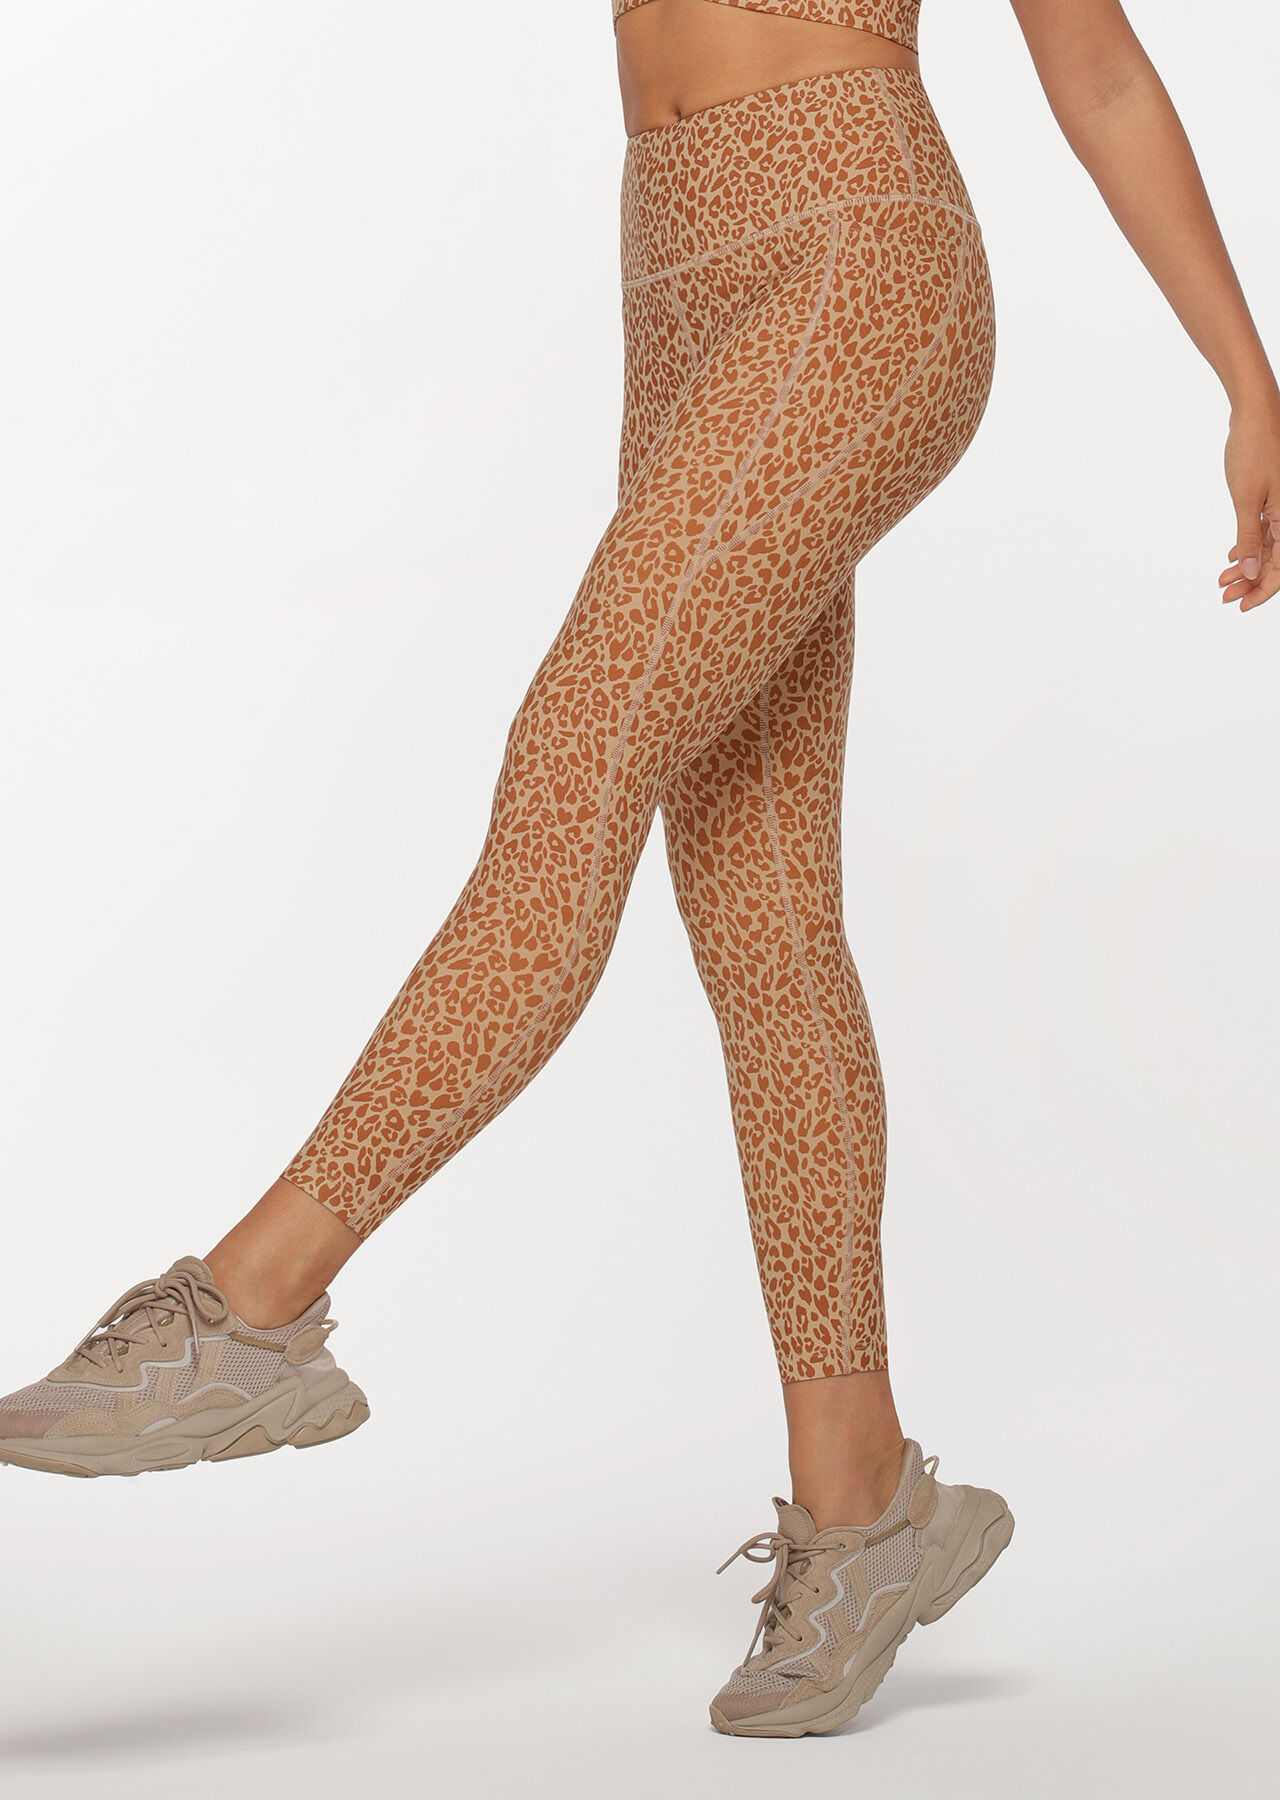 Khaki Leopard Leggings with Pockets Full Length | koko+kind